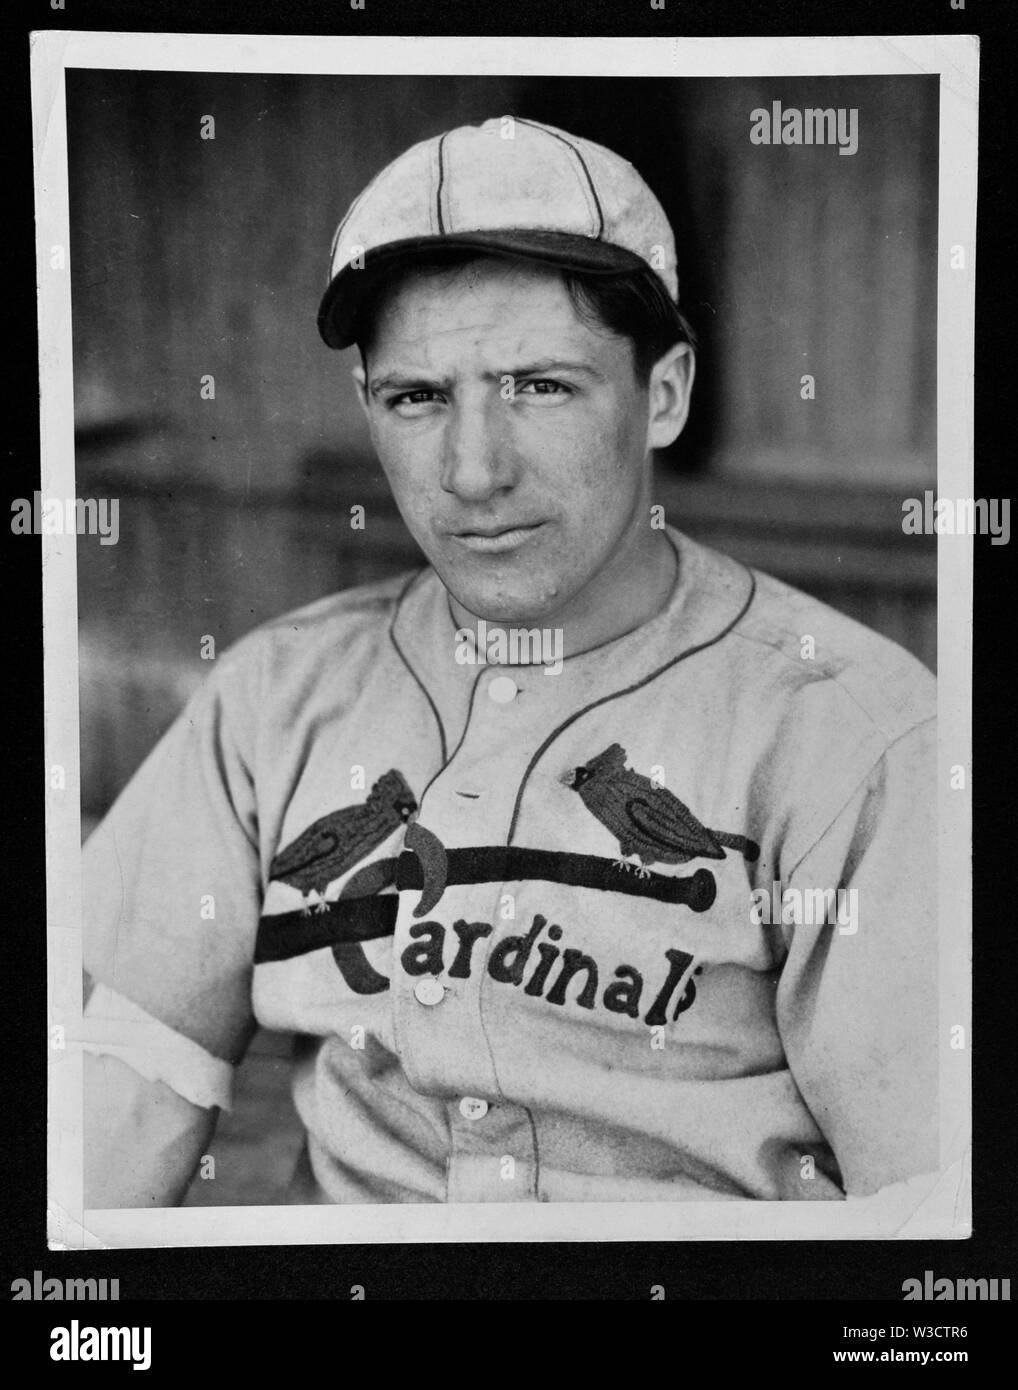 Vintage Running Baseball Player - St. Louis Cardinals (White St. Louis  Wordmark)